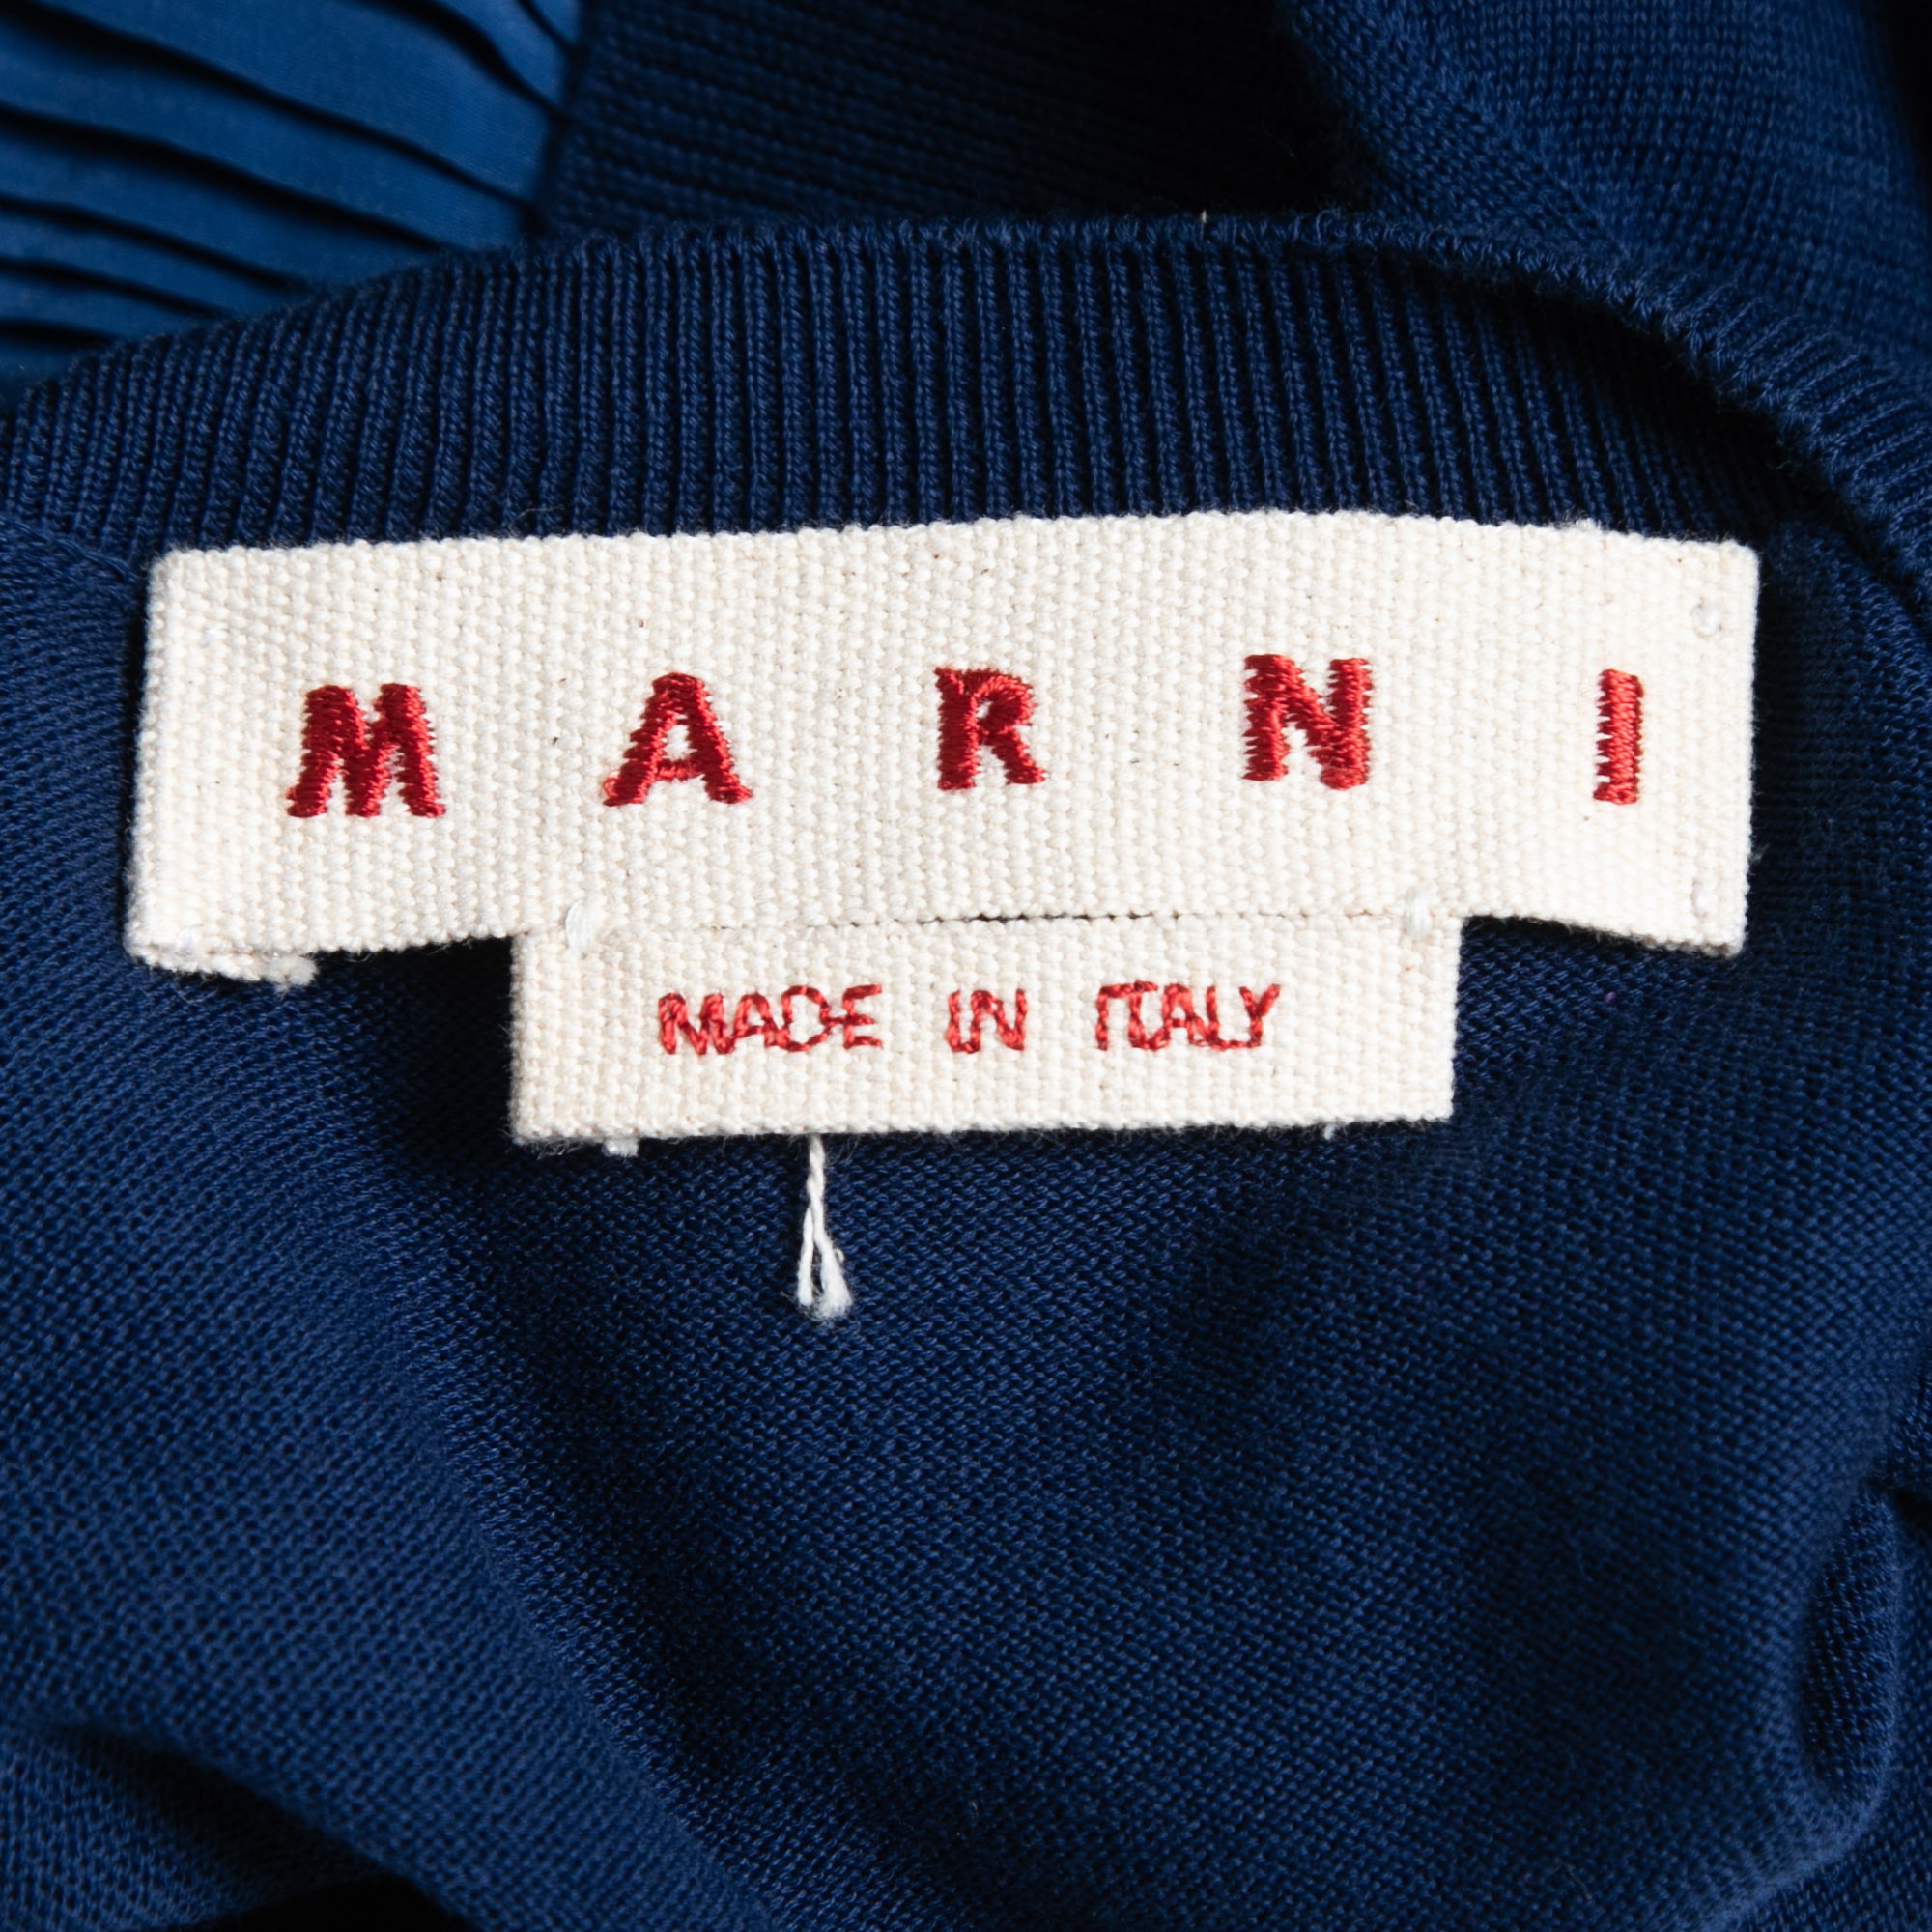 Marni Blue Knit V-Neck Pleated Pullover M